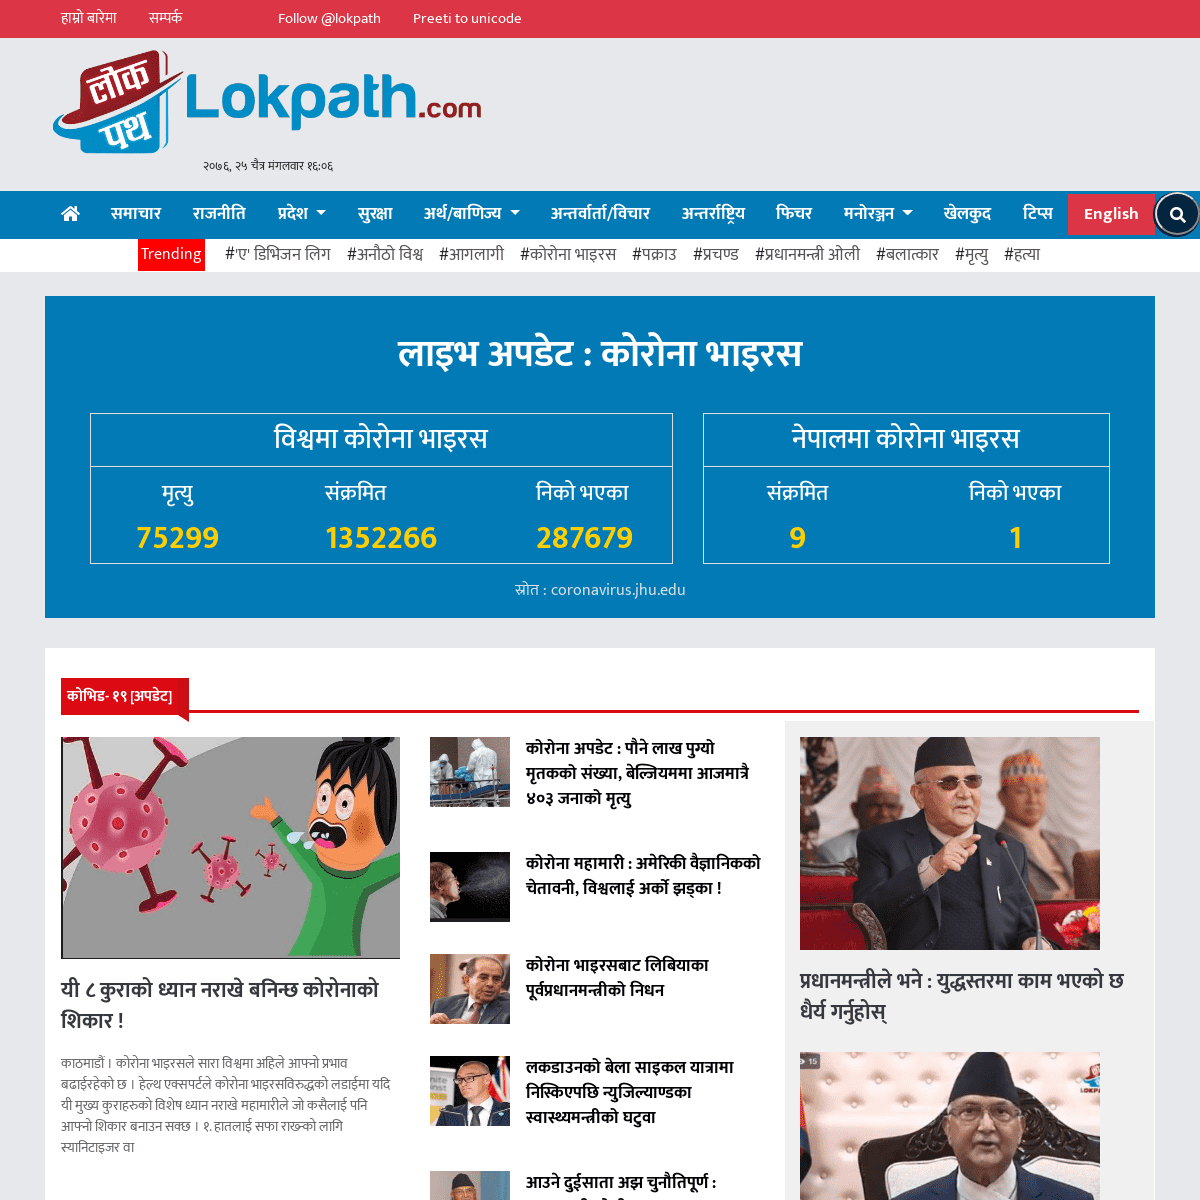 A complete backup of lokpath.com